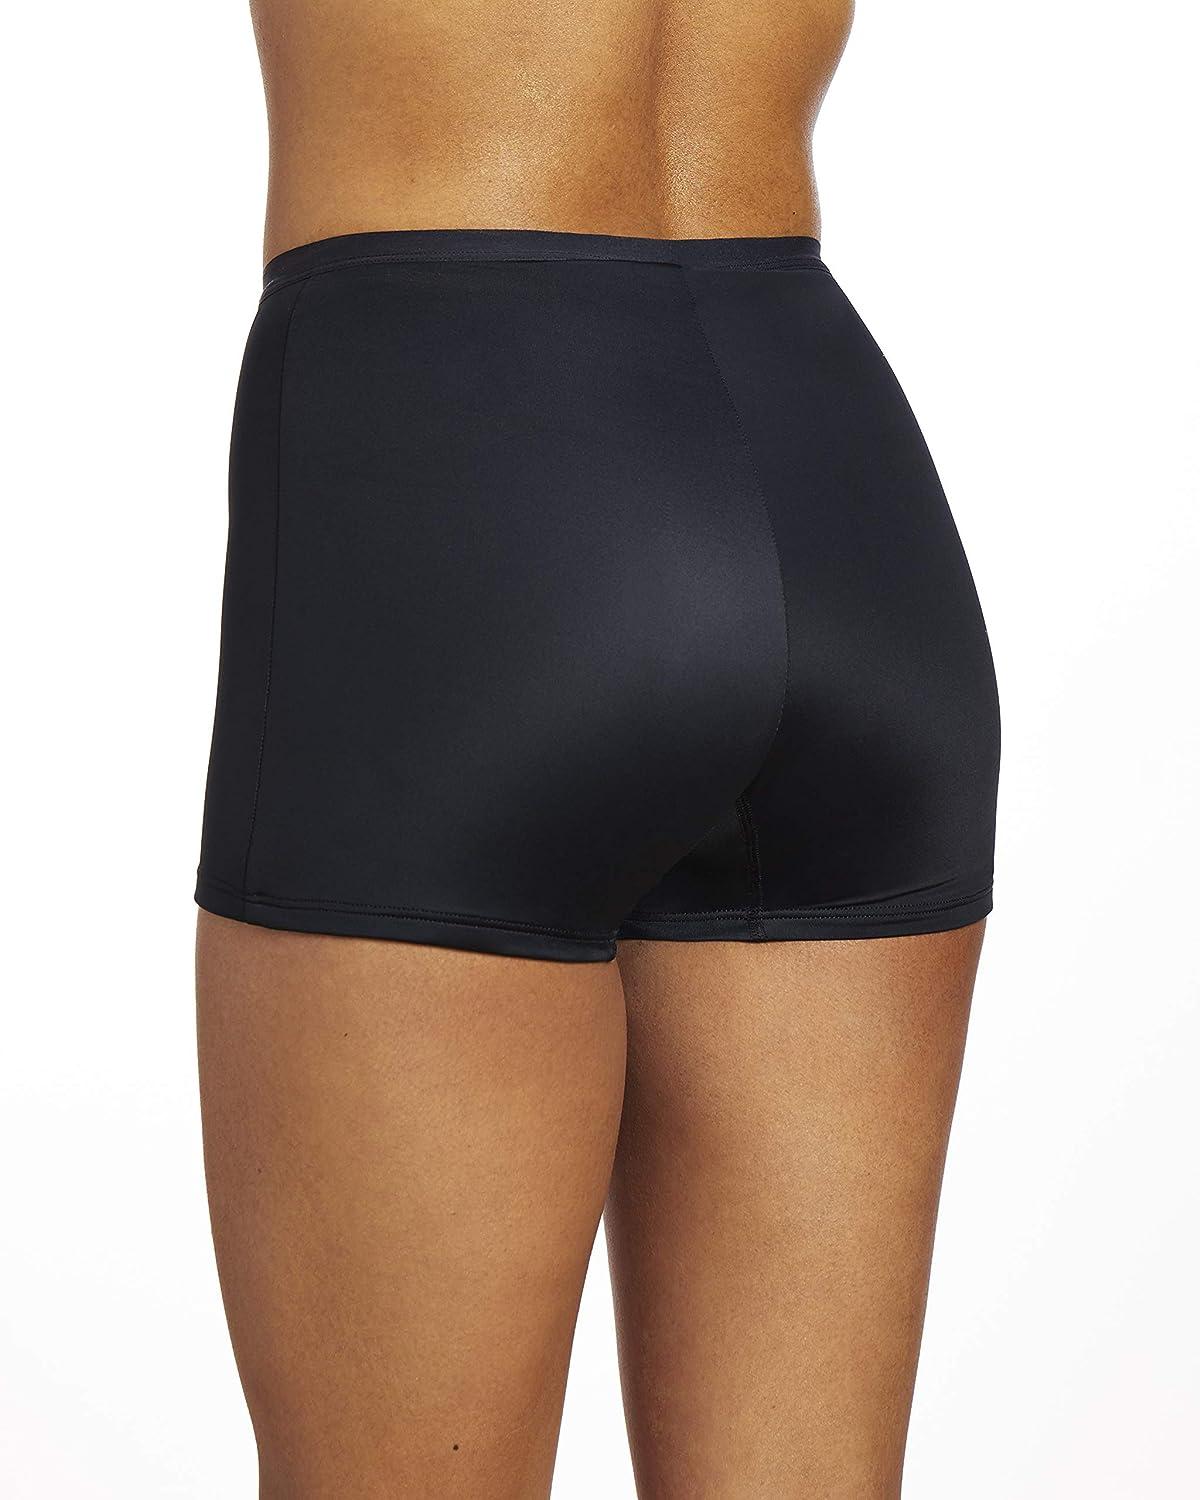 THINX Sleep Shorts Menstrual Sleep Shorts, FSA HSA Approved Feminine Care, Period  Underwear for Women Holds 5 Tampons, Black, X 